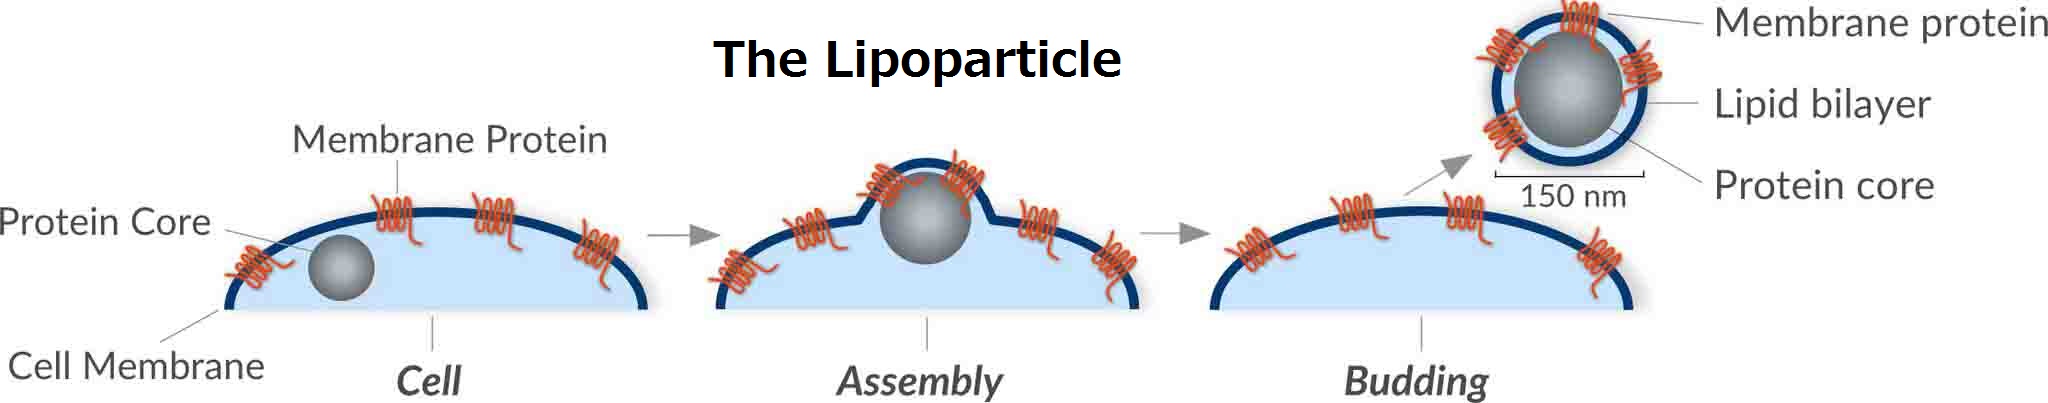 Lipoparticle